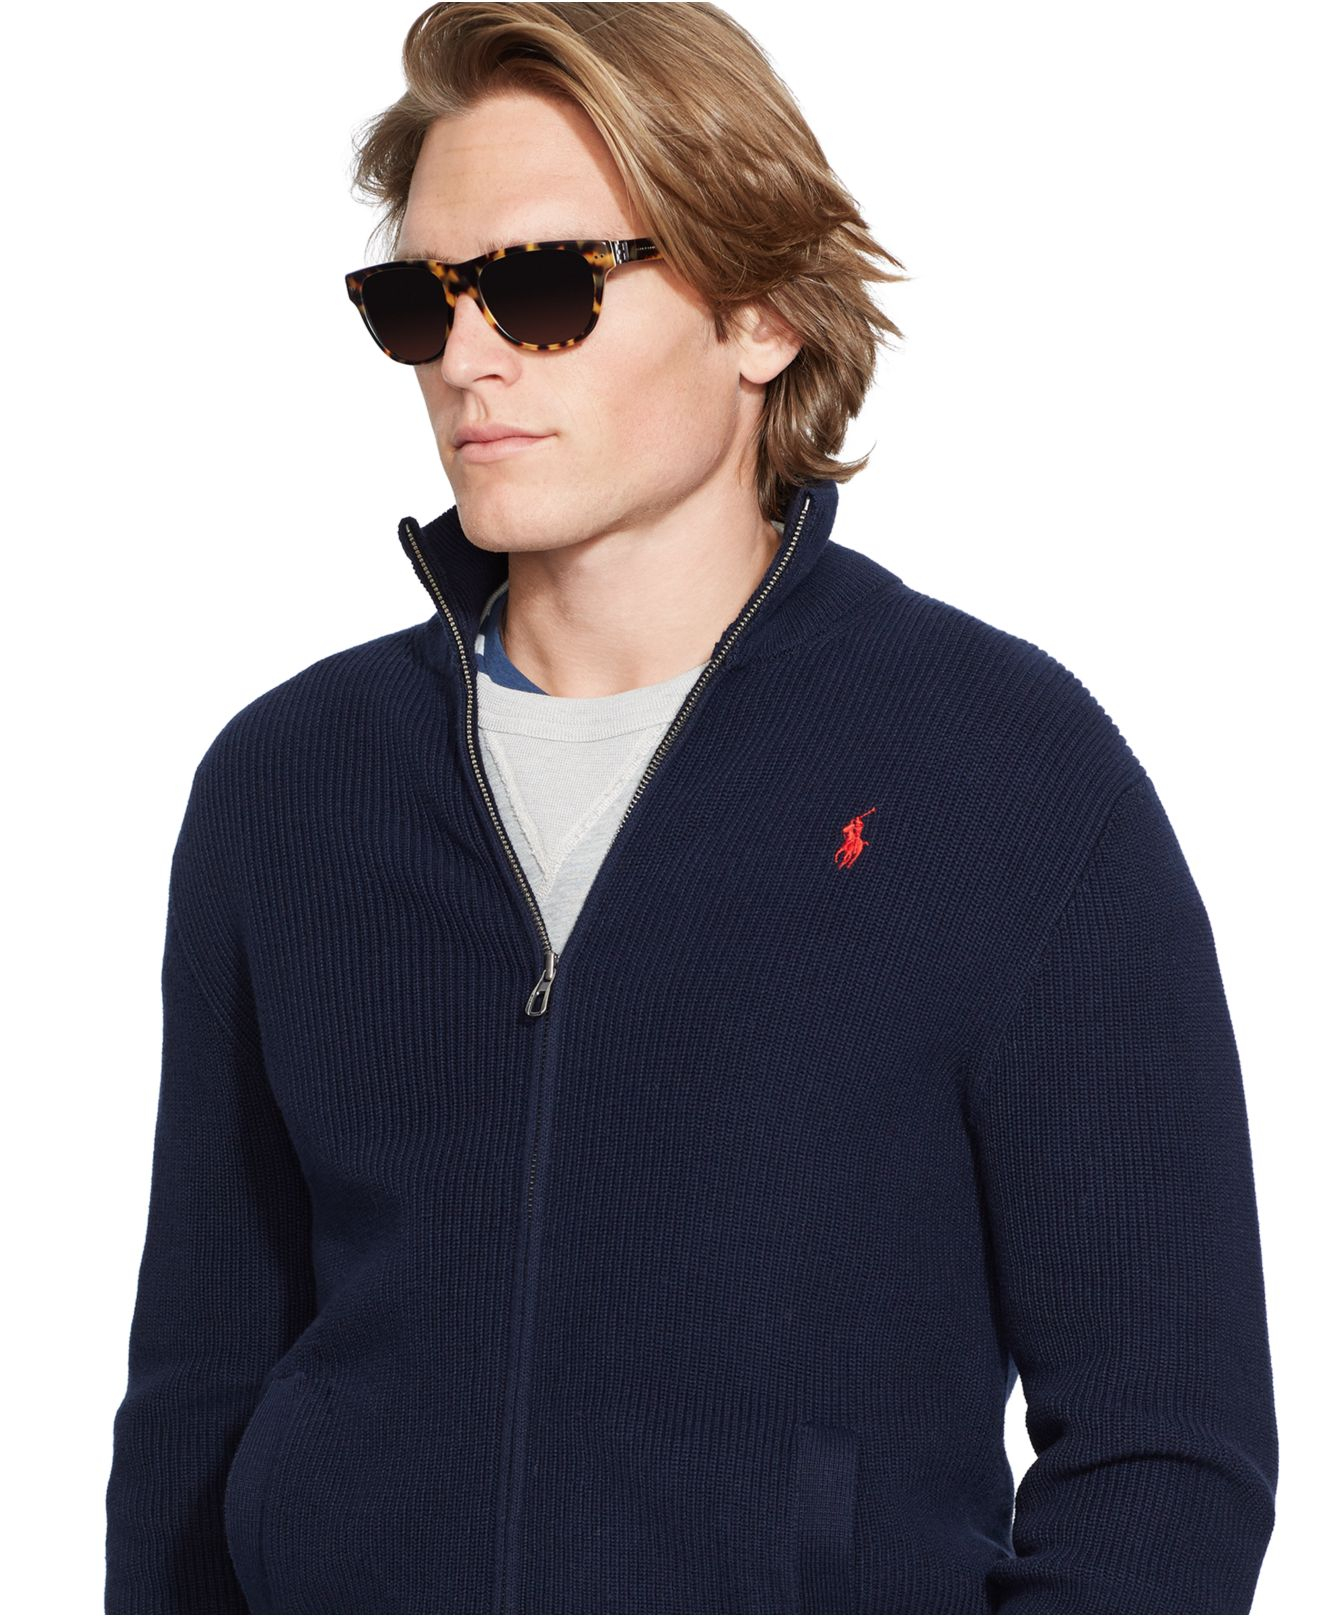 Lyst - Polo Ralph Lauren Lightweight Full-zip Sweater in Blue for Men